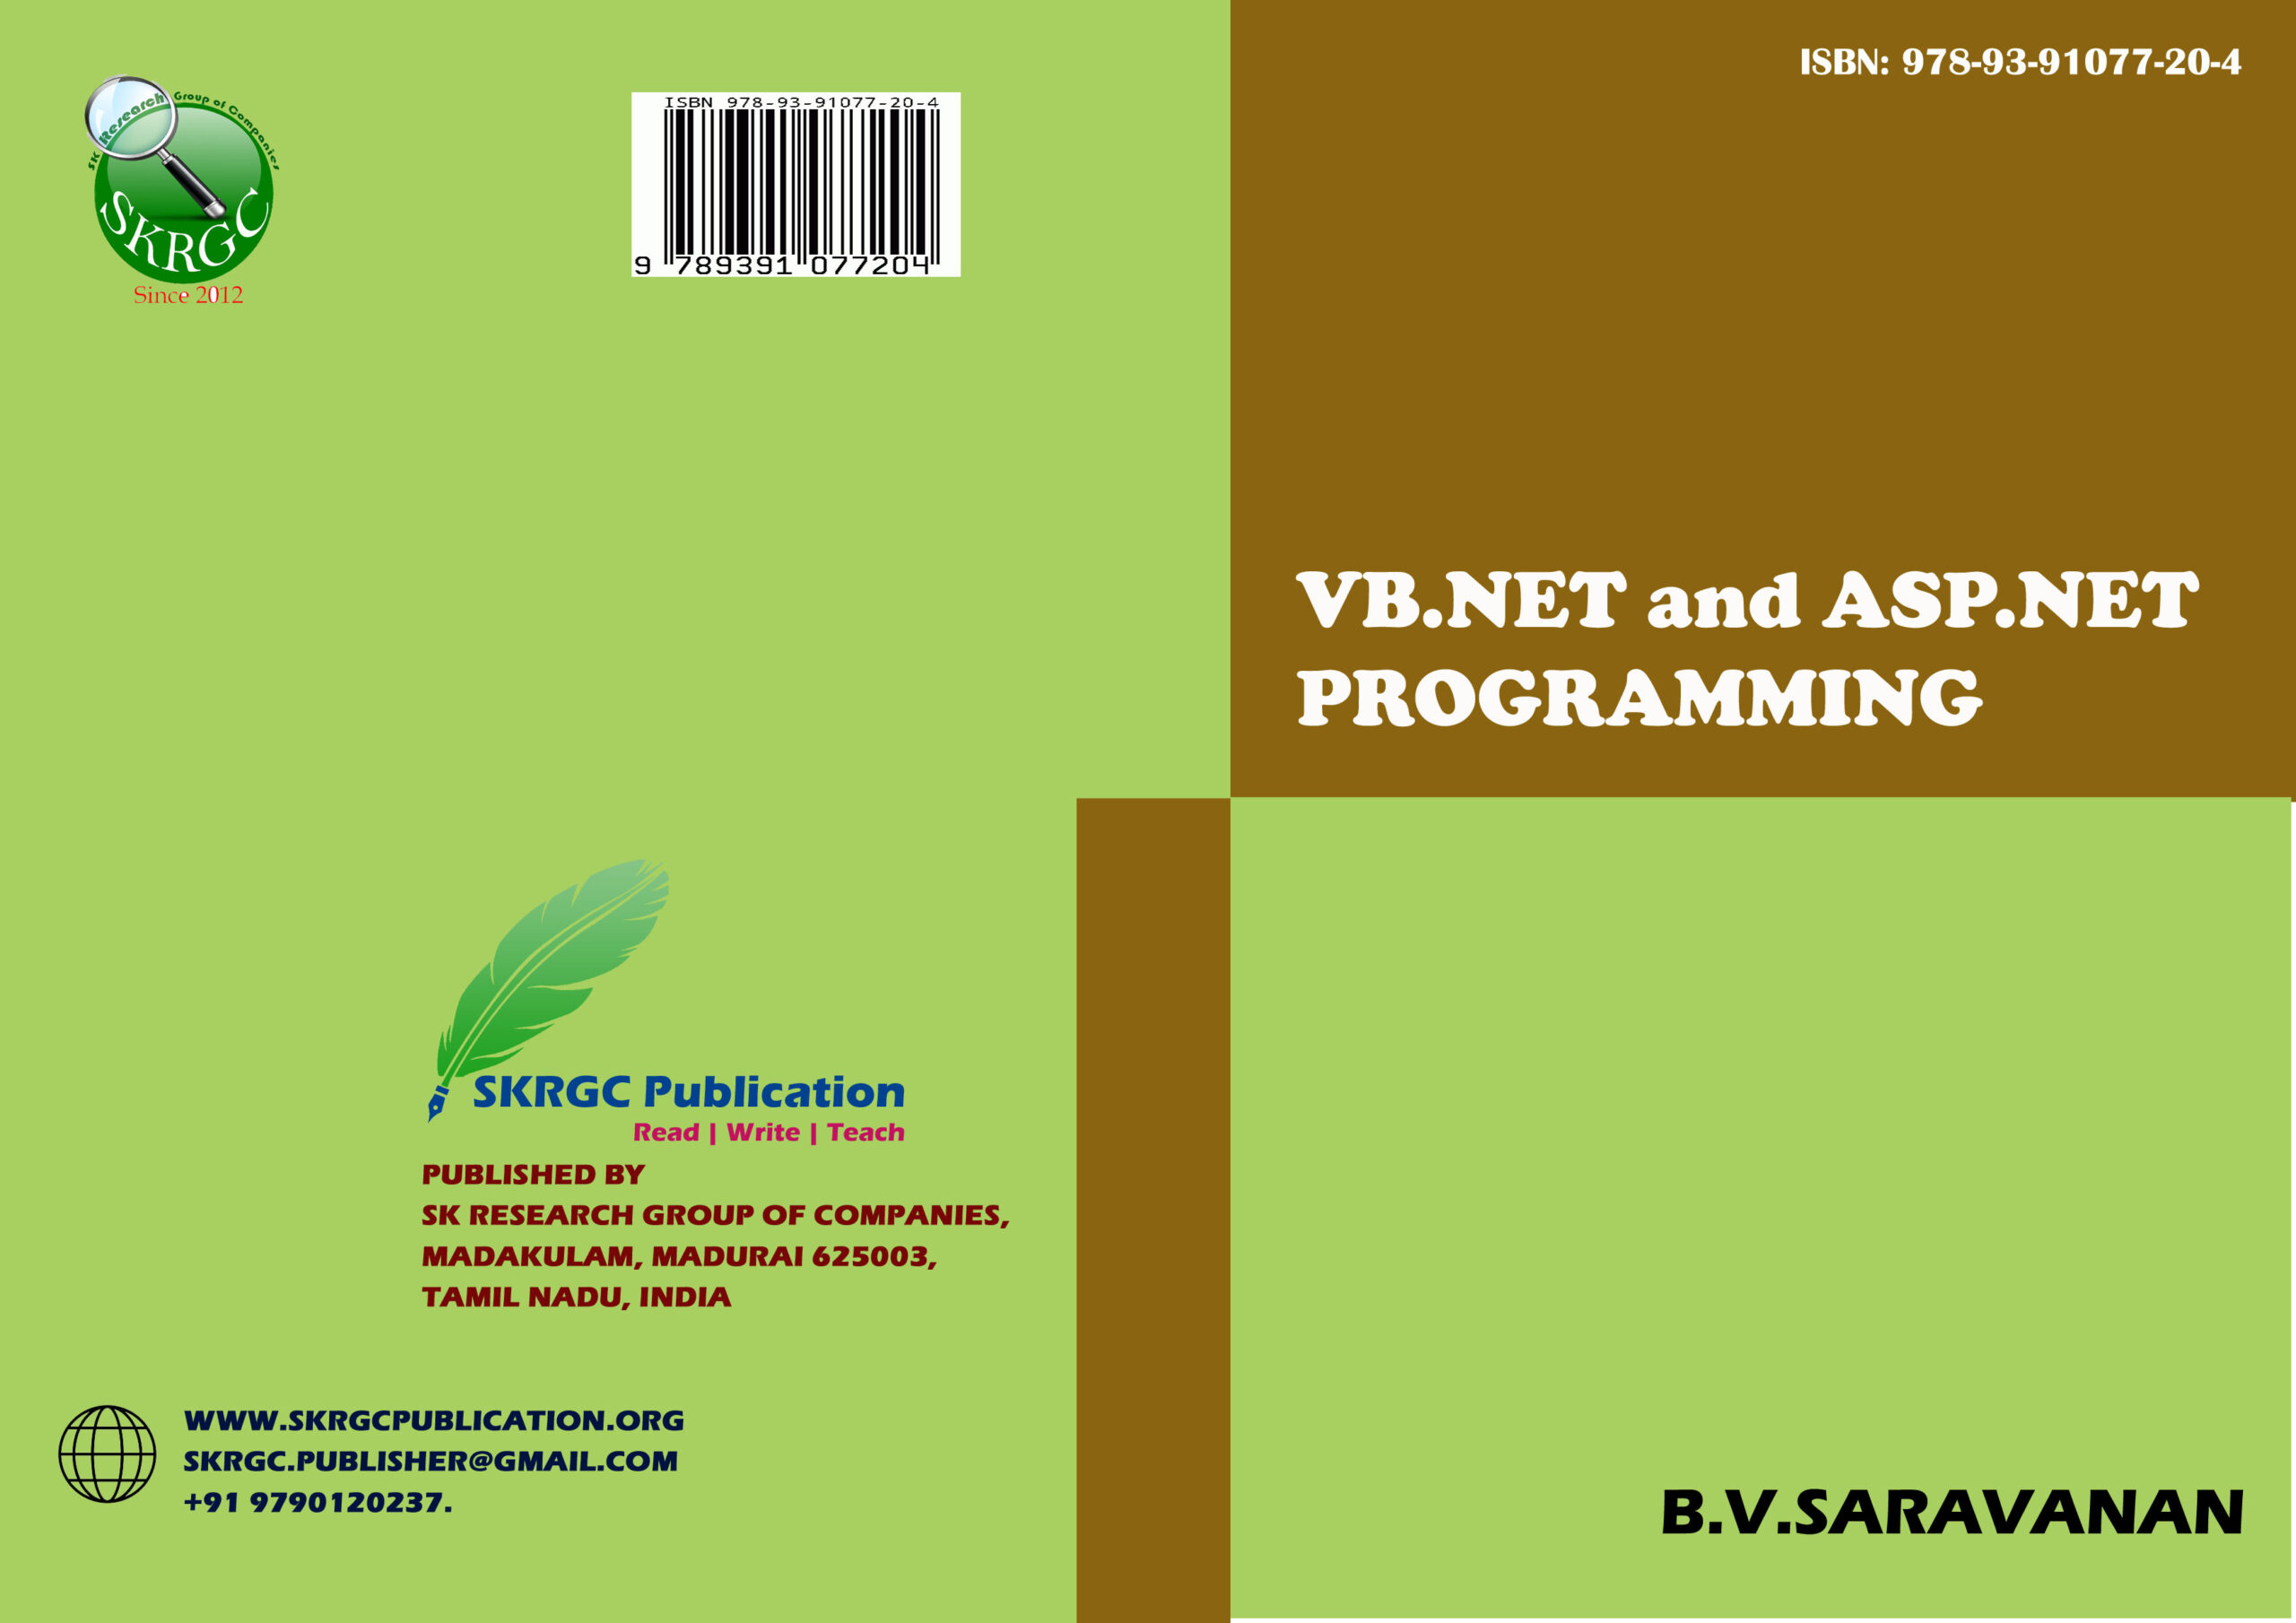 VB.NET AND ASP.NET PROGRAMMING